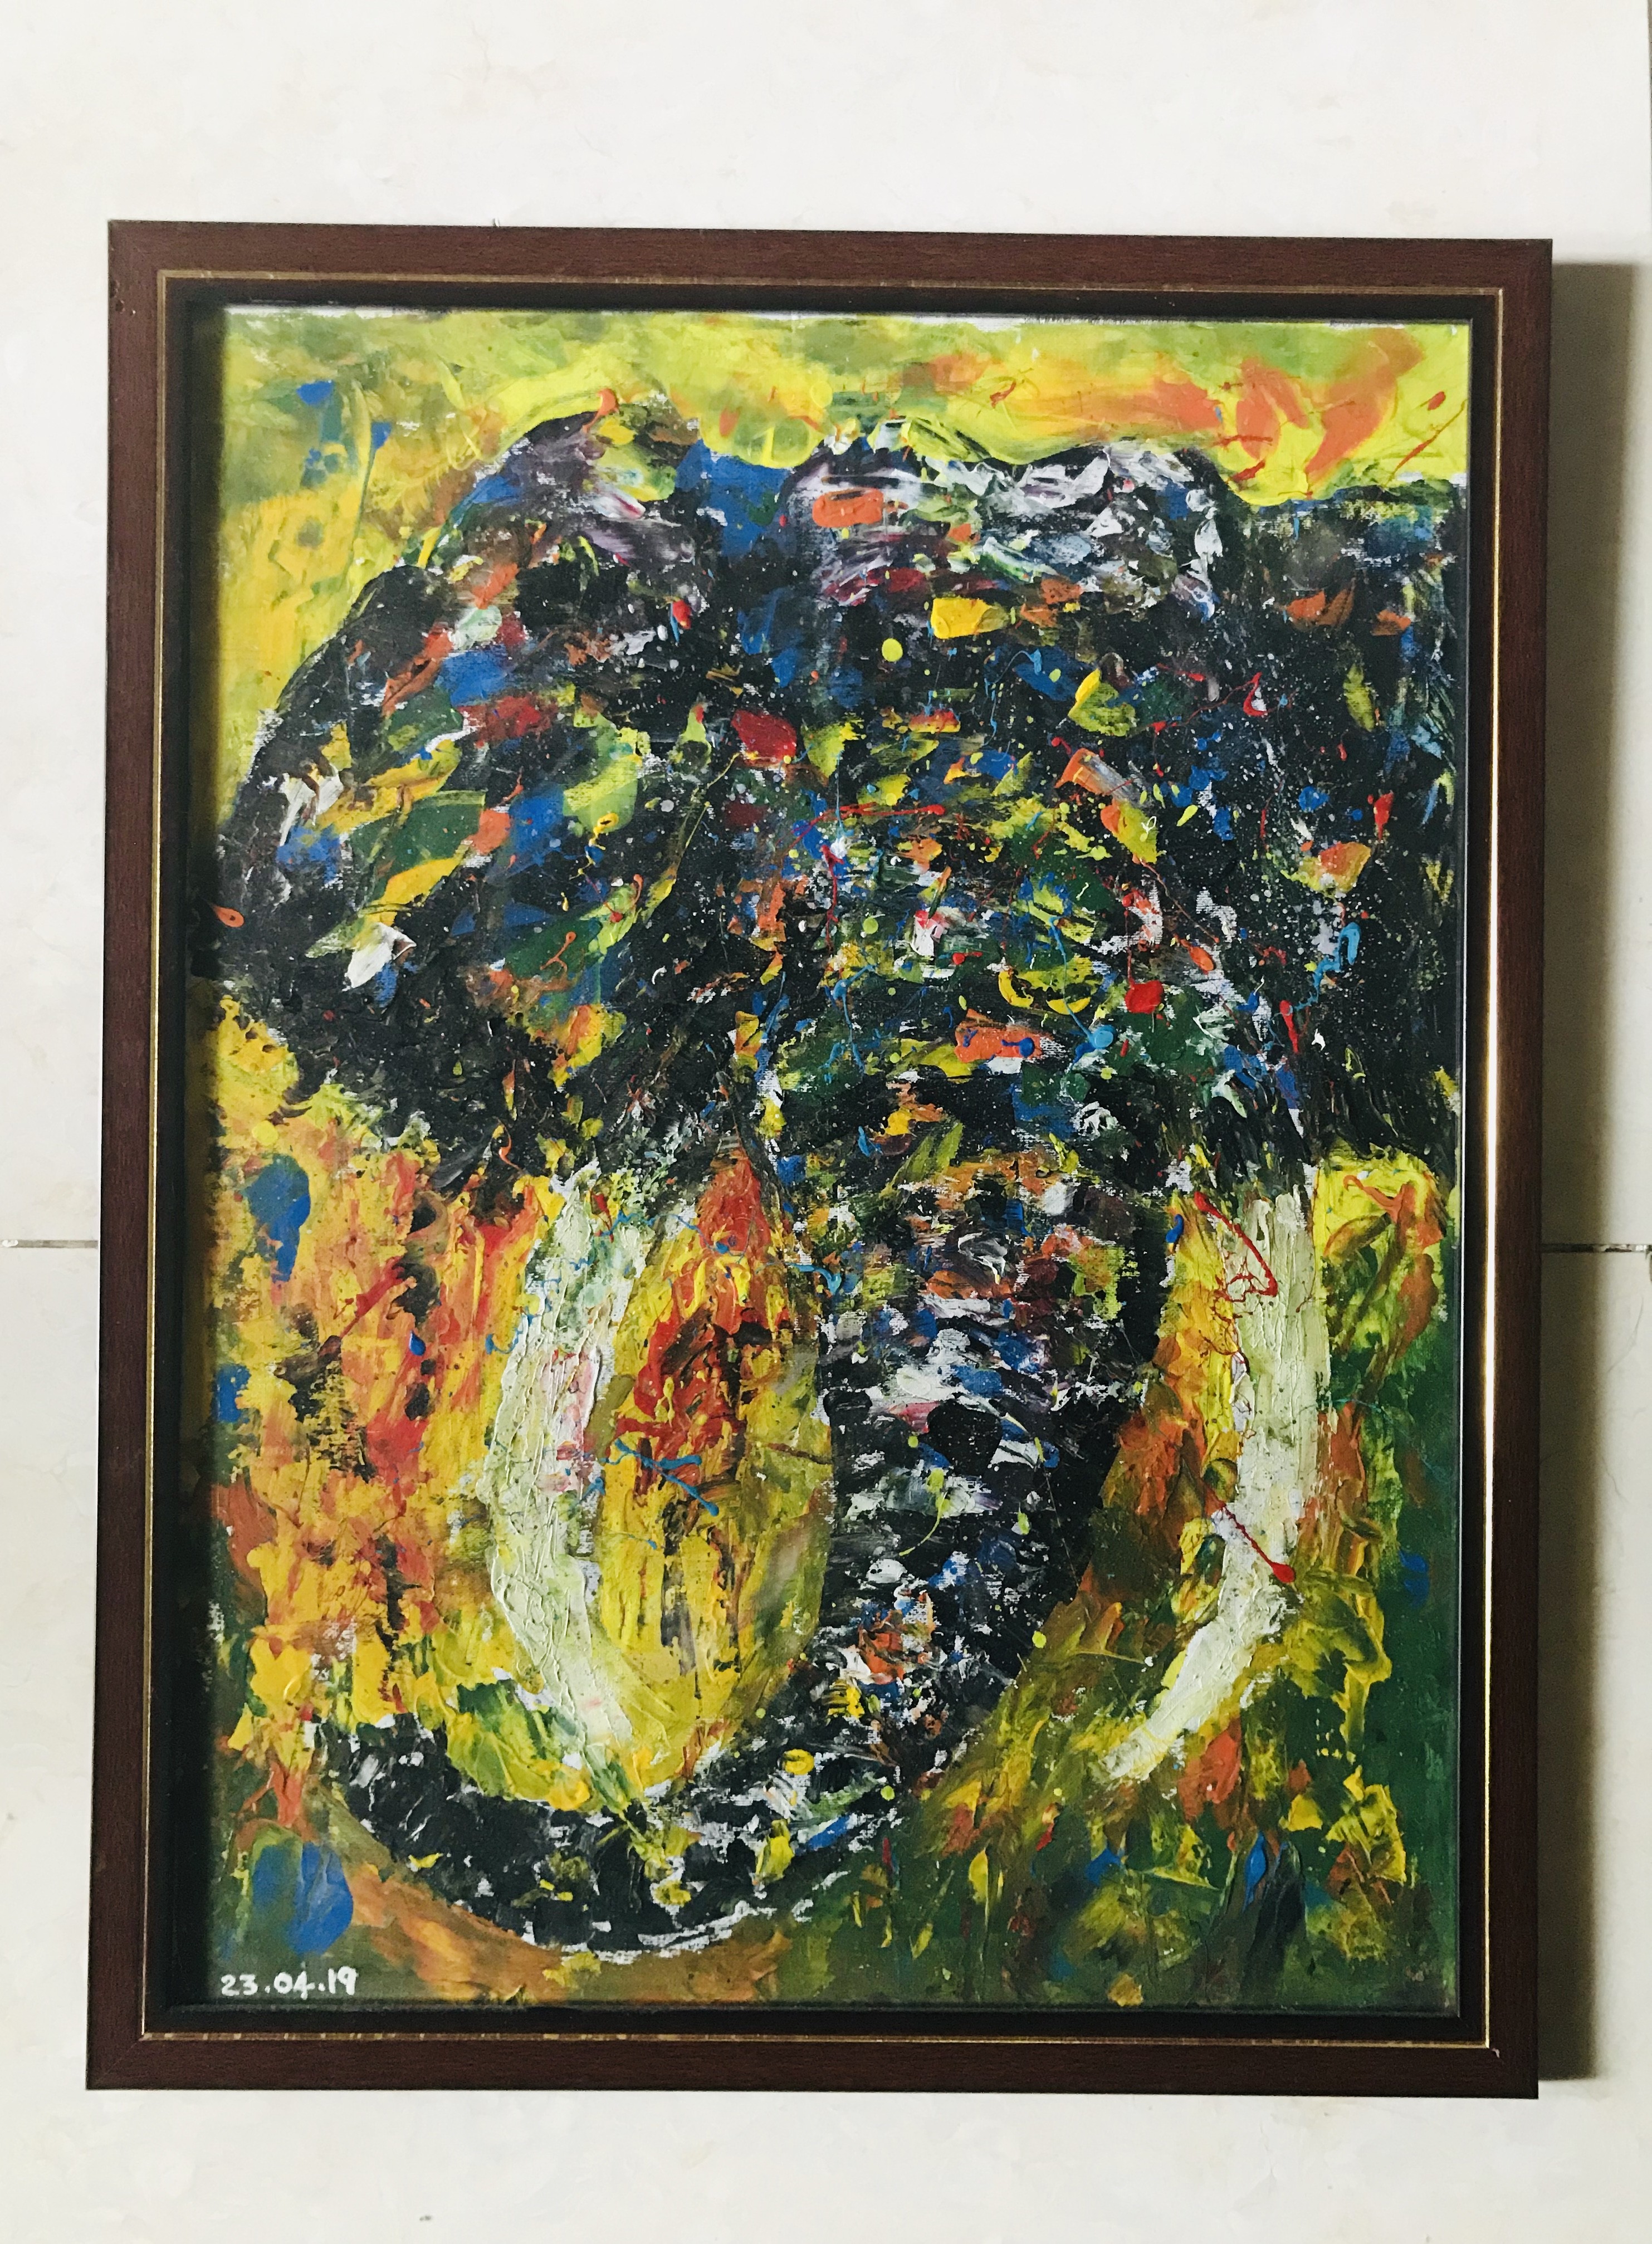 "The Elephant" by Sanduni Bandara